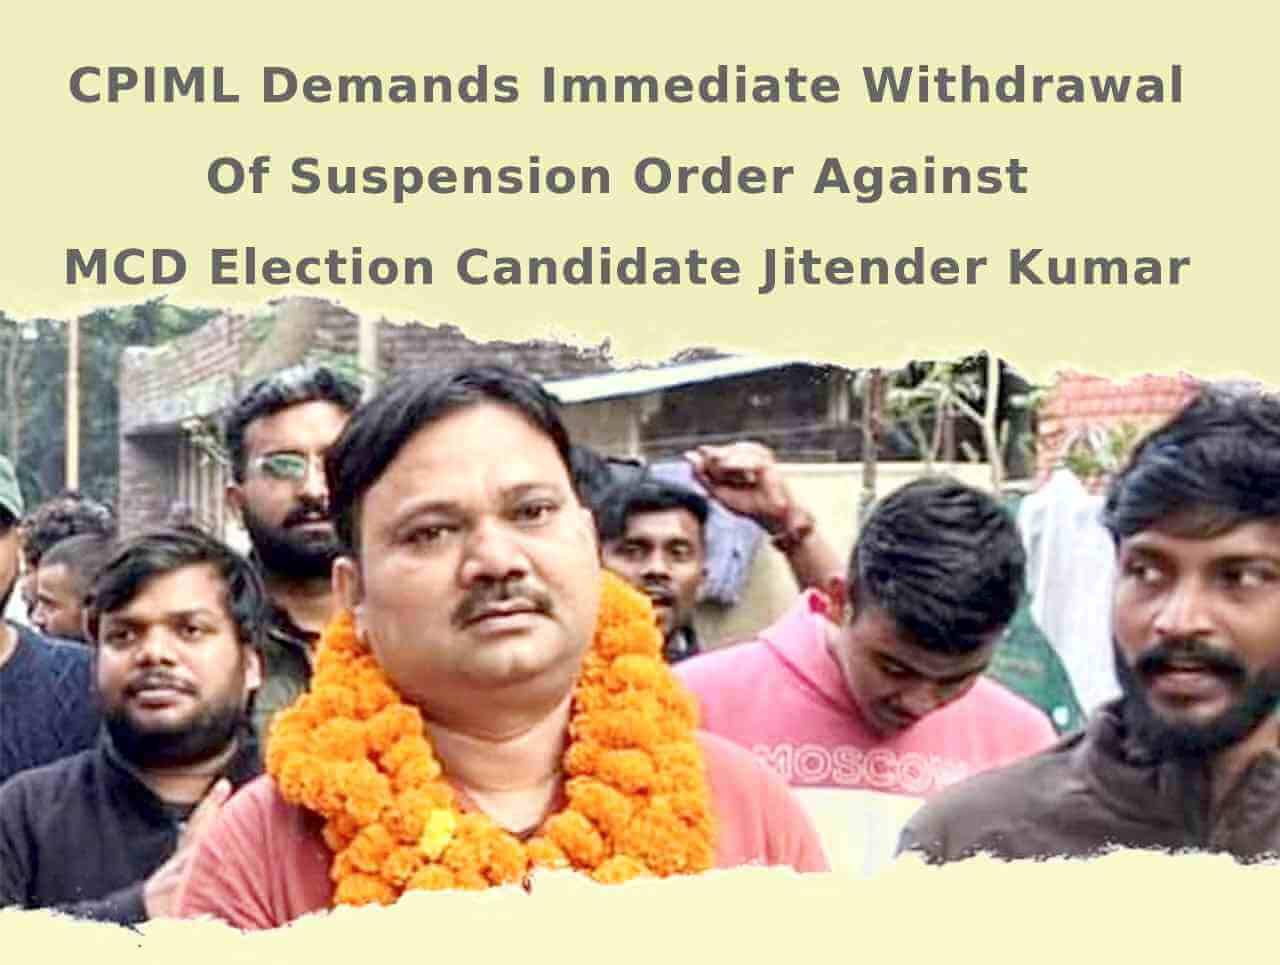 MCD Election Candidate Jitender Kumar